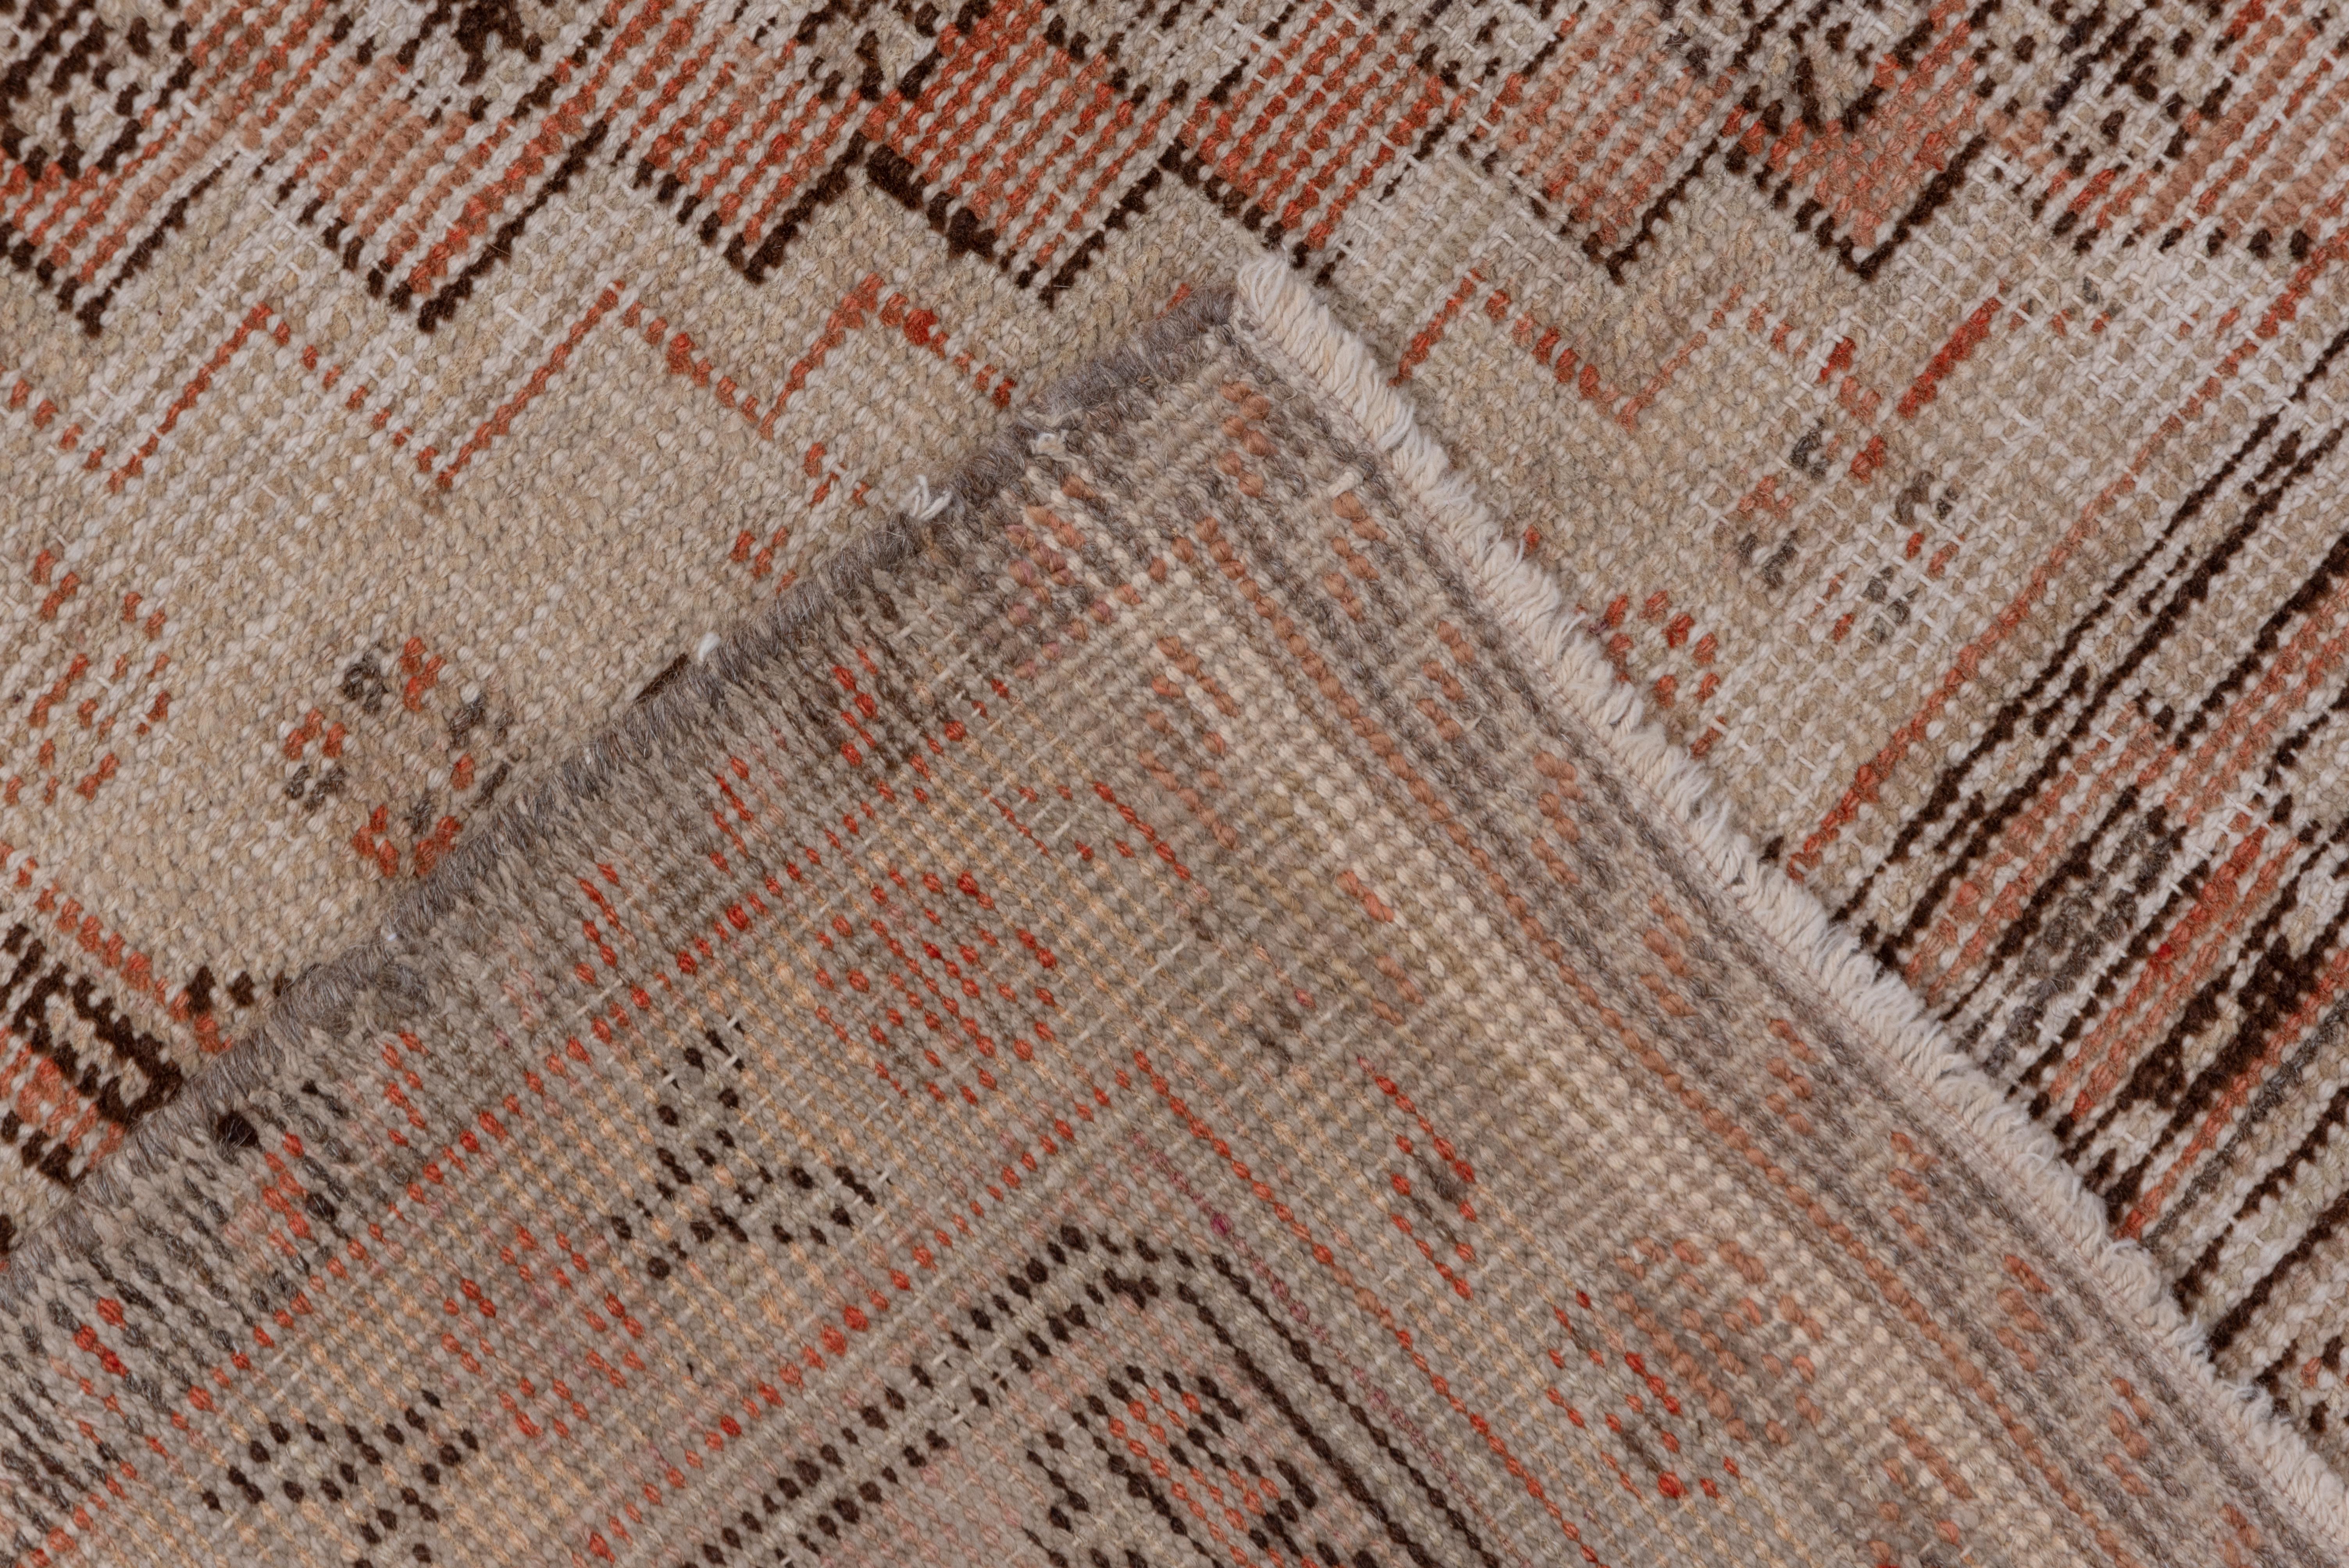 Wool Antique Tribal Khotan Rug, Orange and Light Gray Tones For Sale